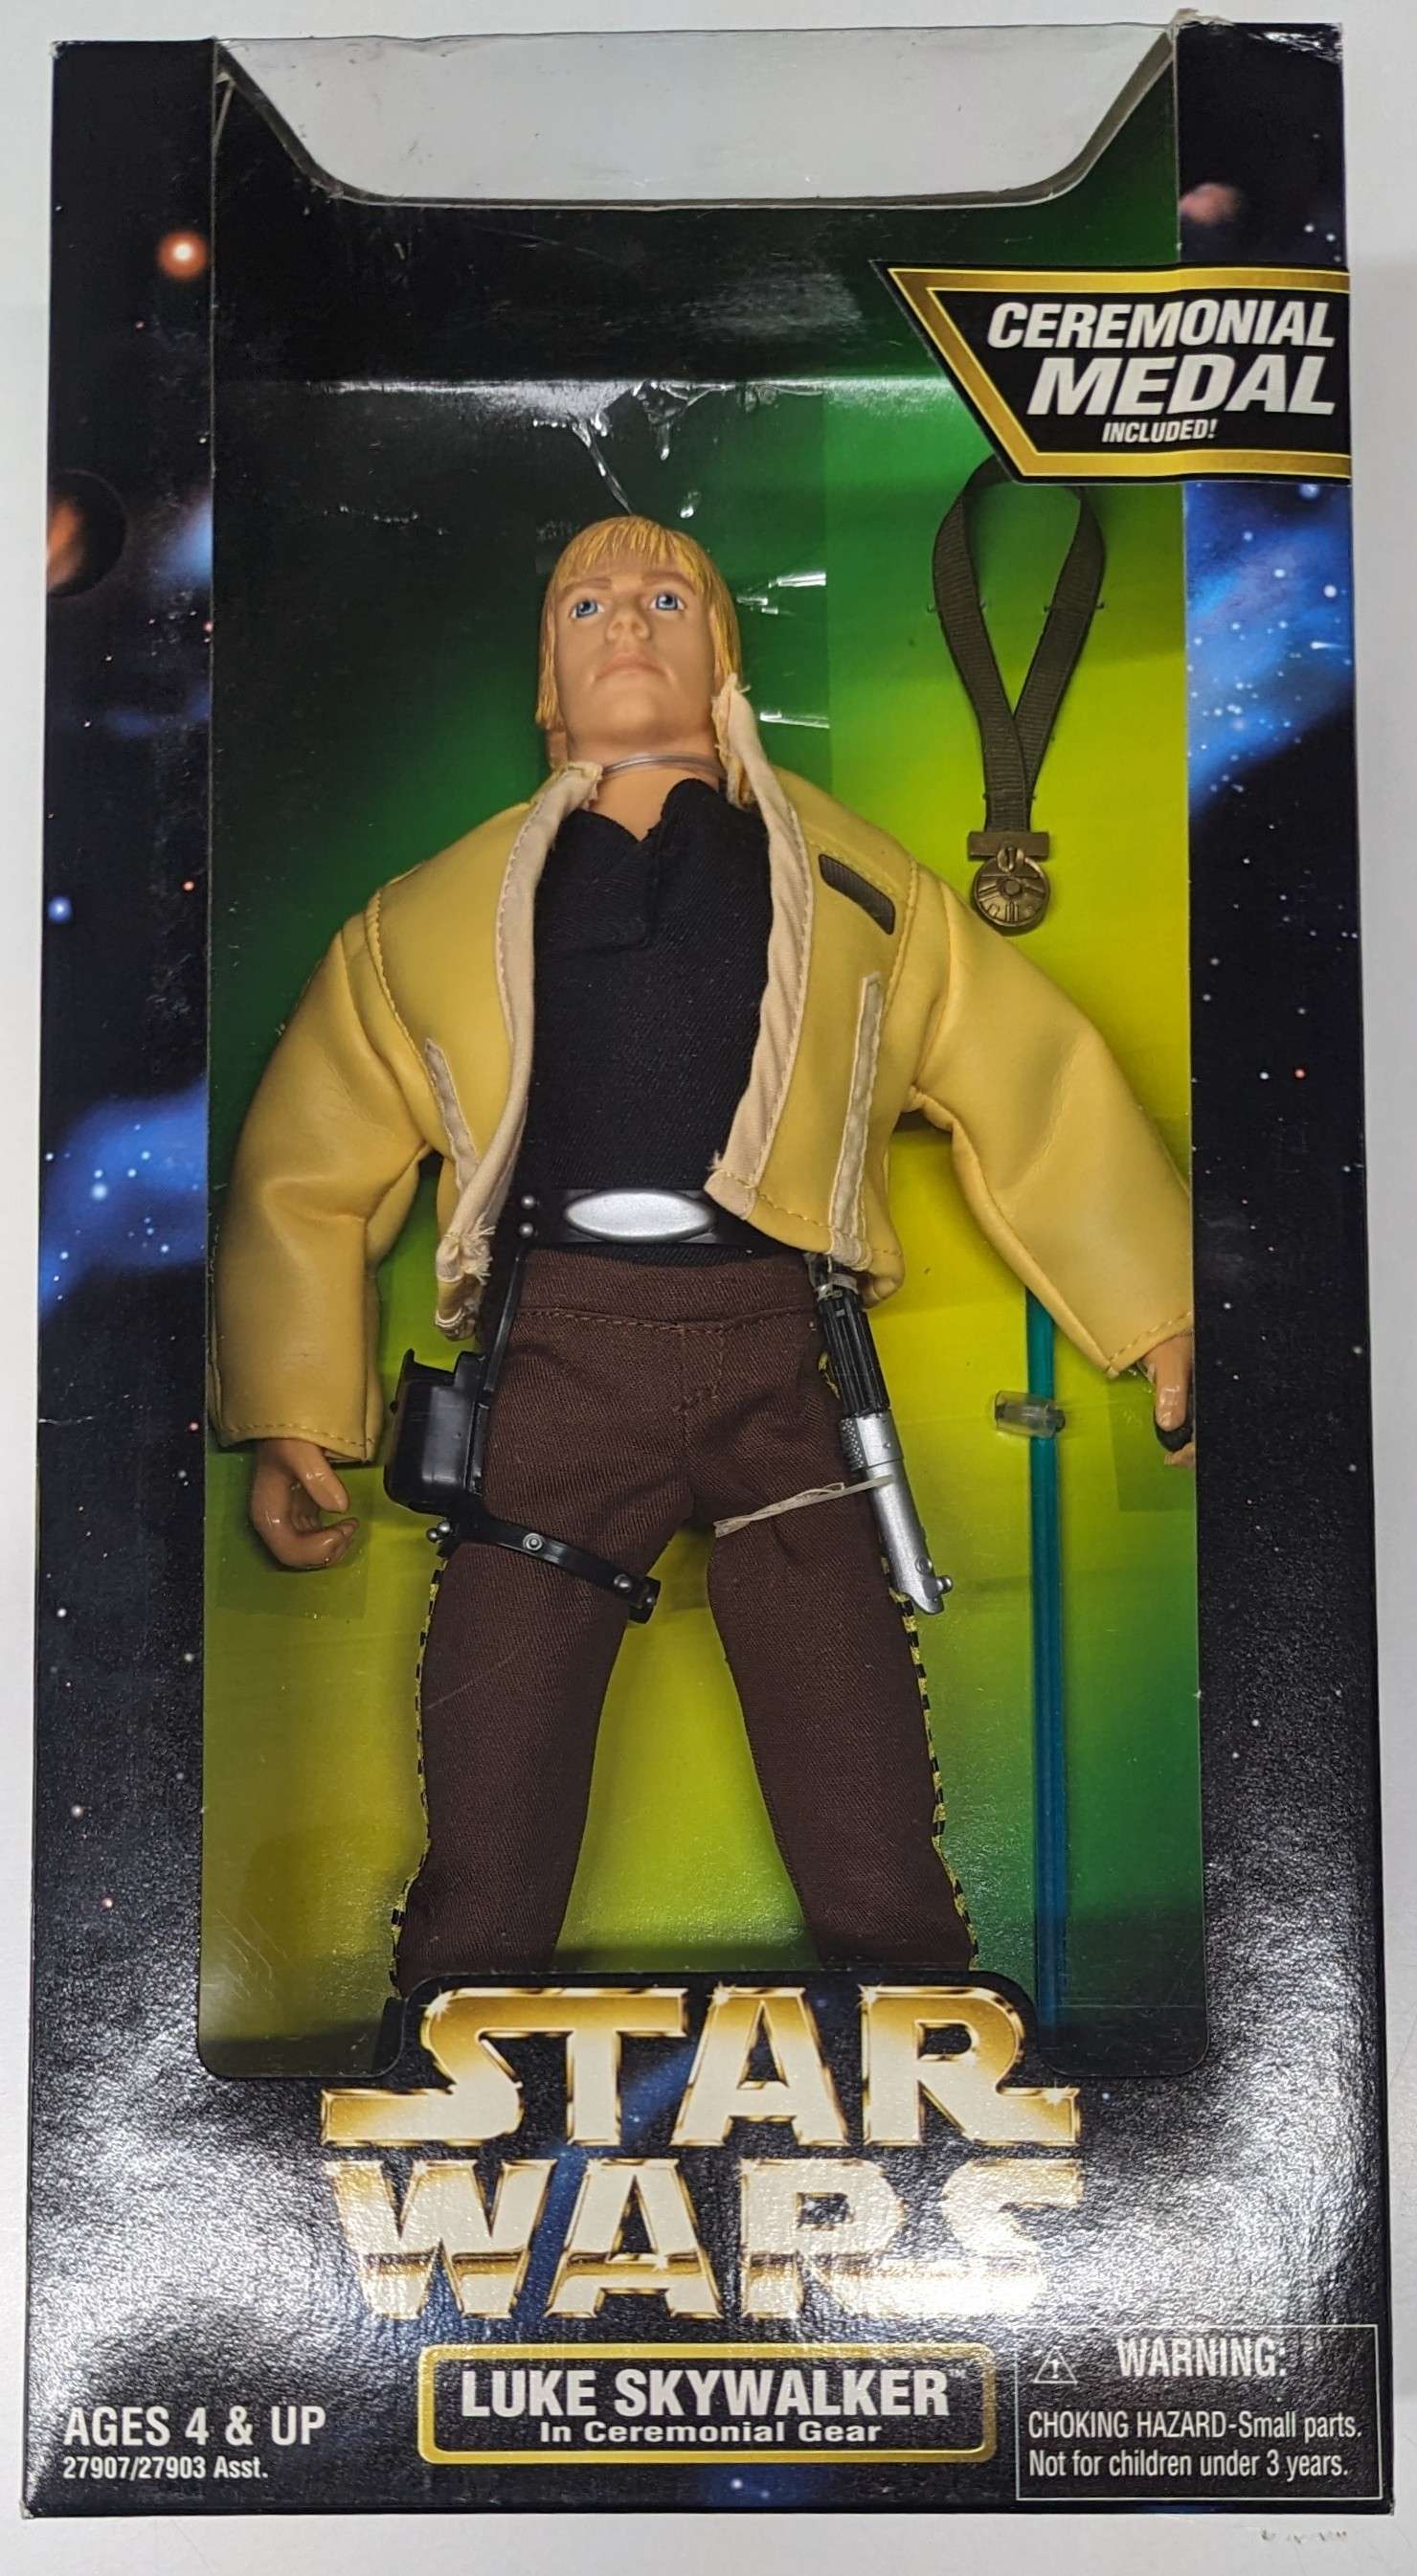 1997 Kenner Star Wars Action Collection Luke Skywalker in Ceremonial Gear Action Figure